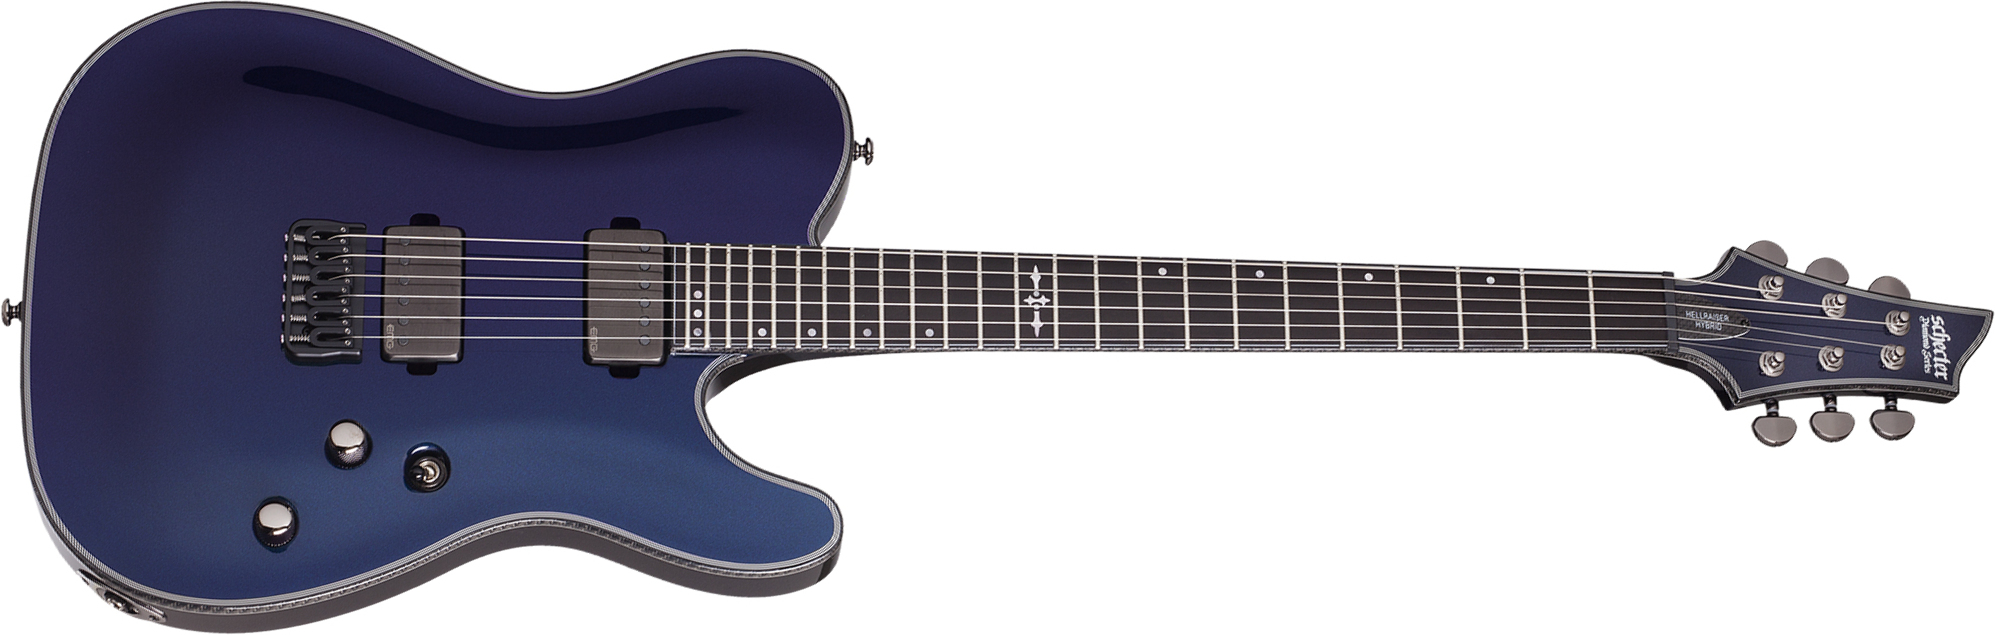 Schecter Pt Hellraiser Hybrid 2h Emg Ht Eb - Ultraviolet - Tel shape electric guitar - Main picture